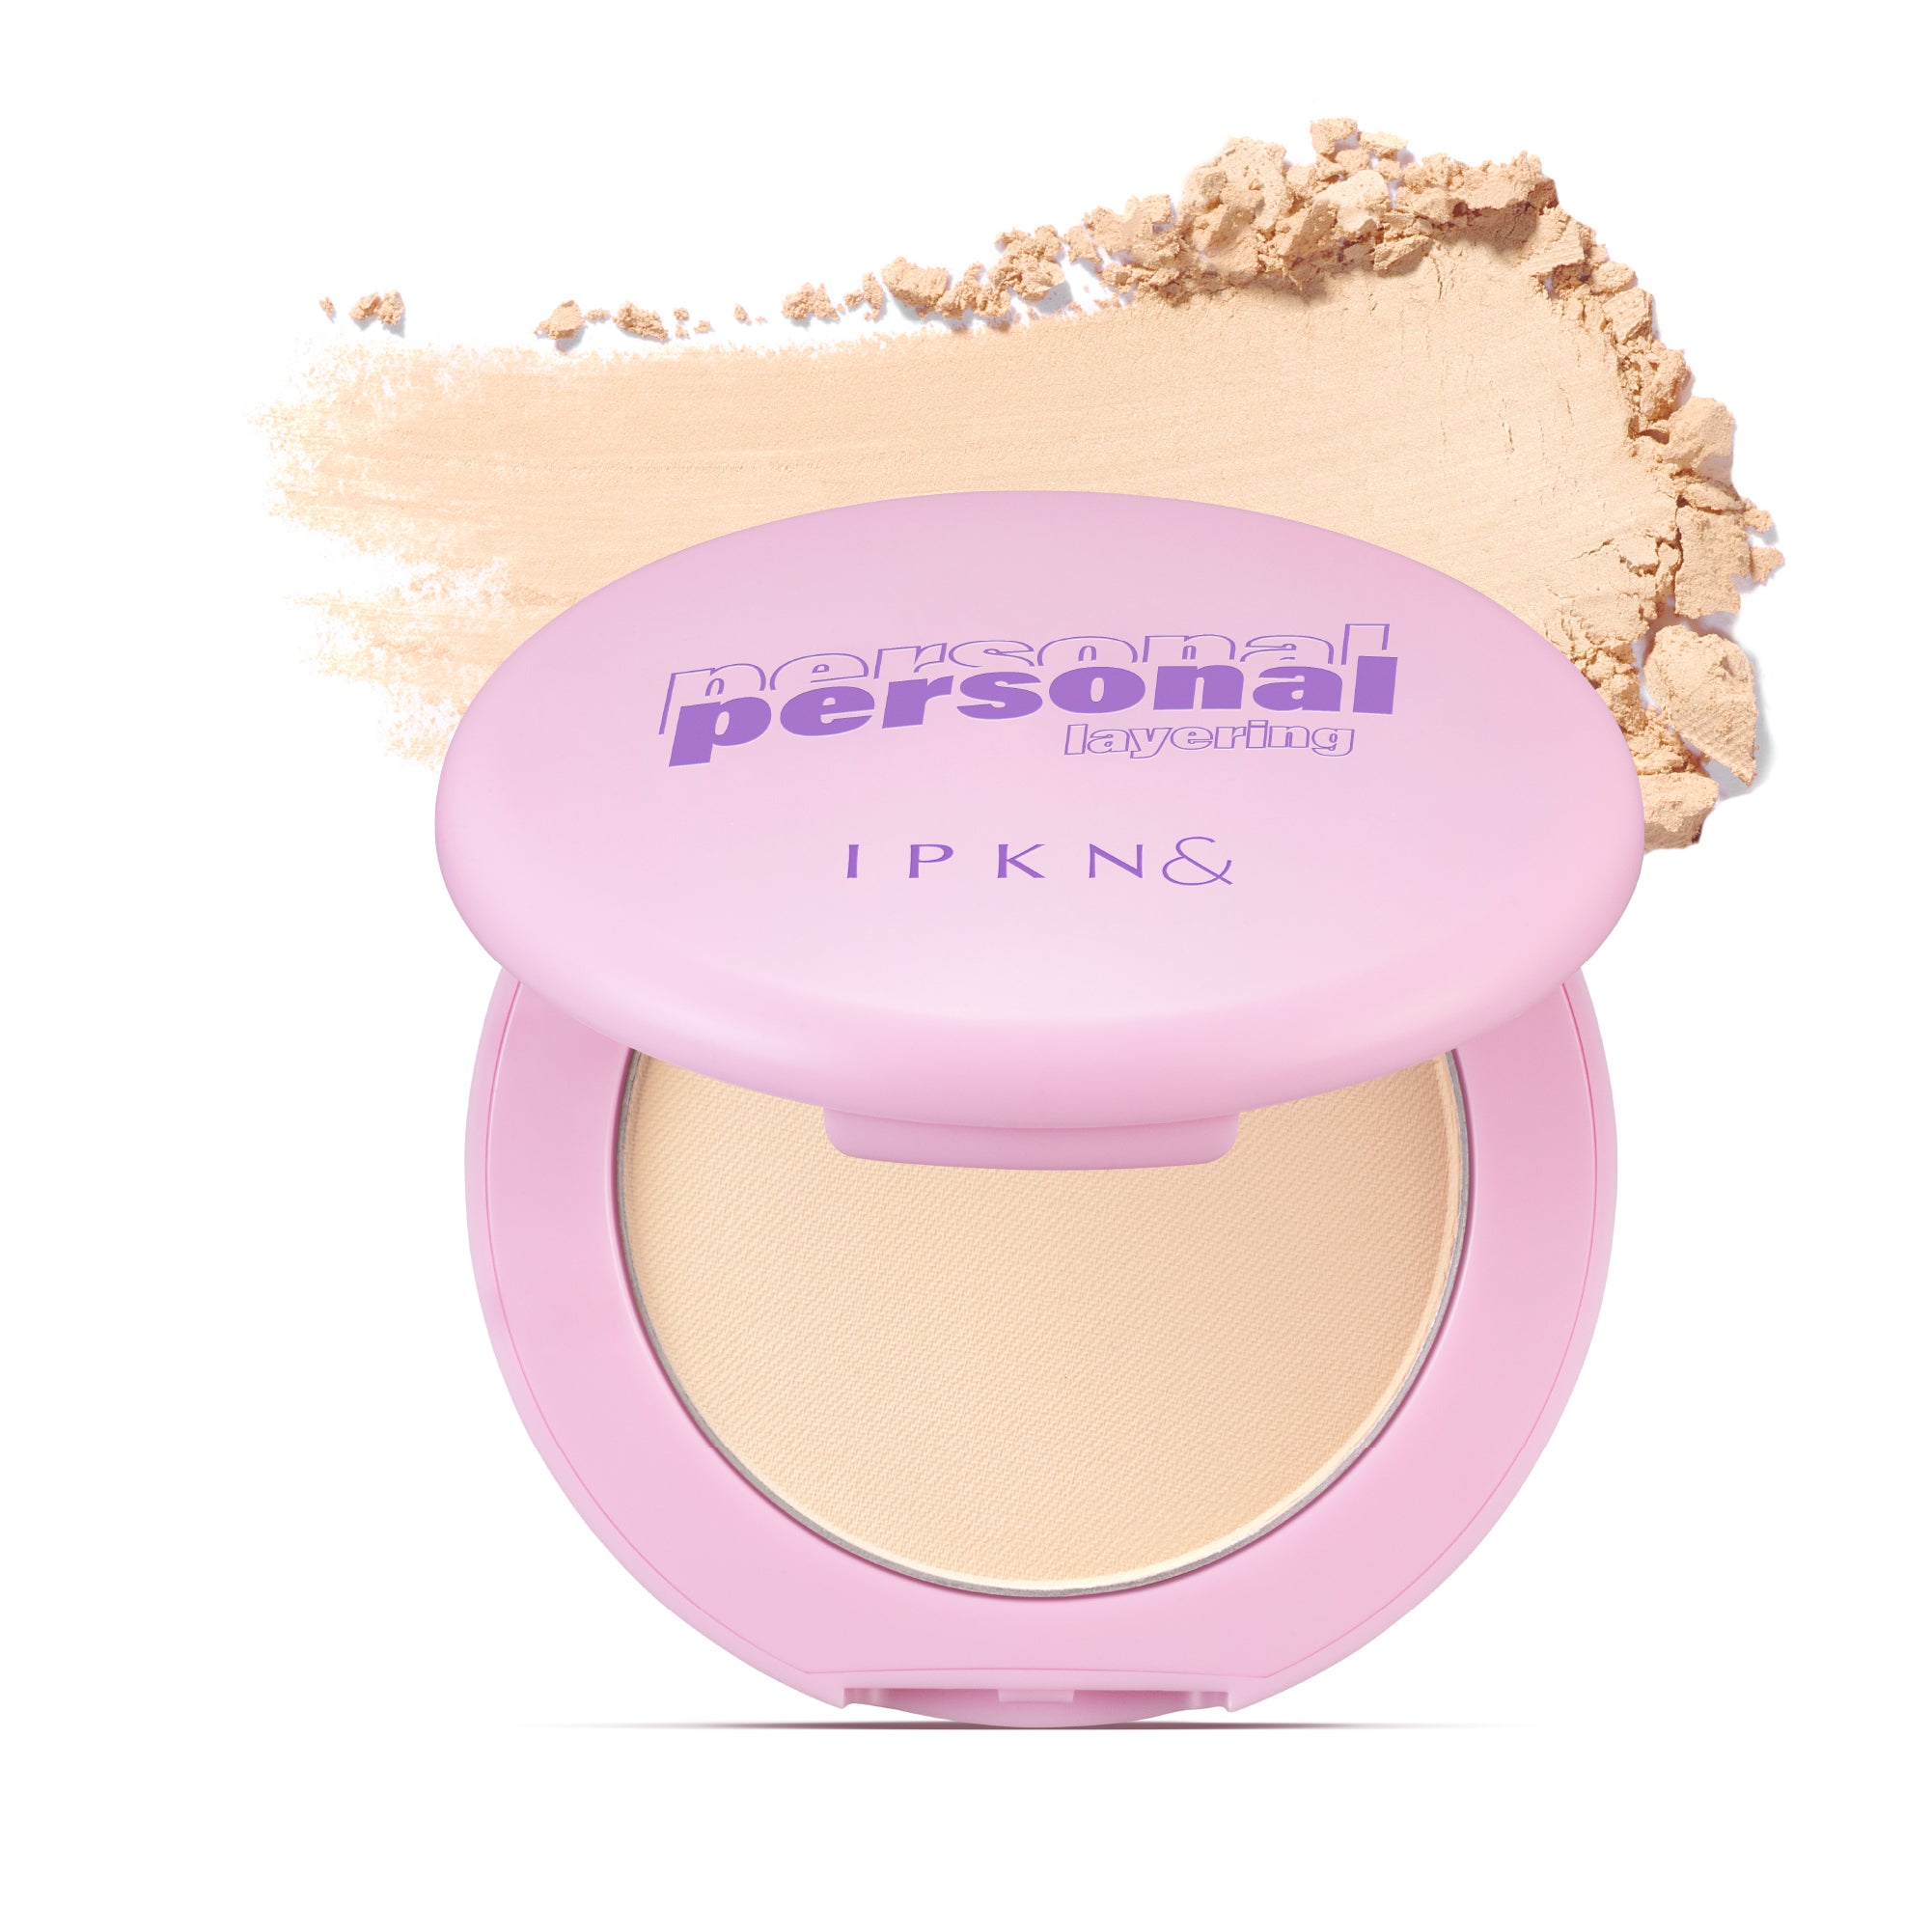 Personal Perfume Powder Pact 9g